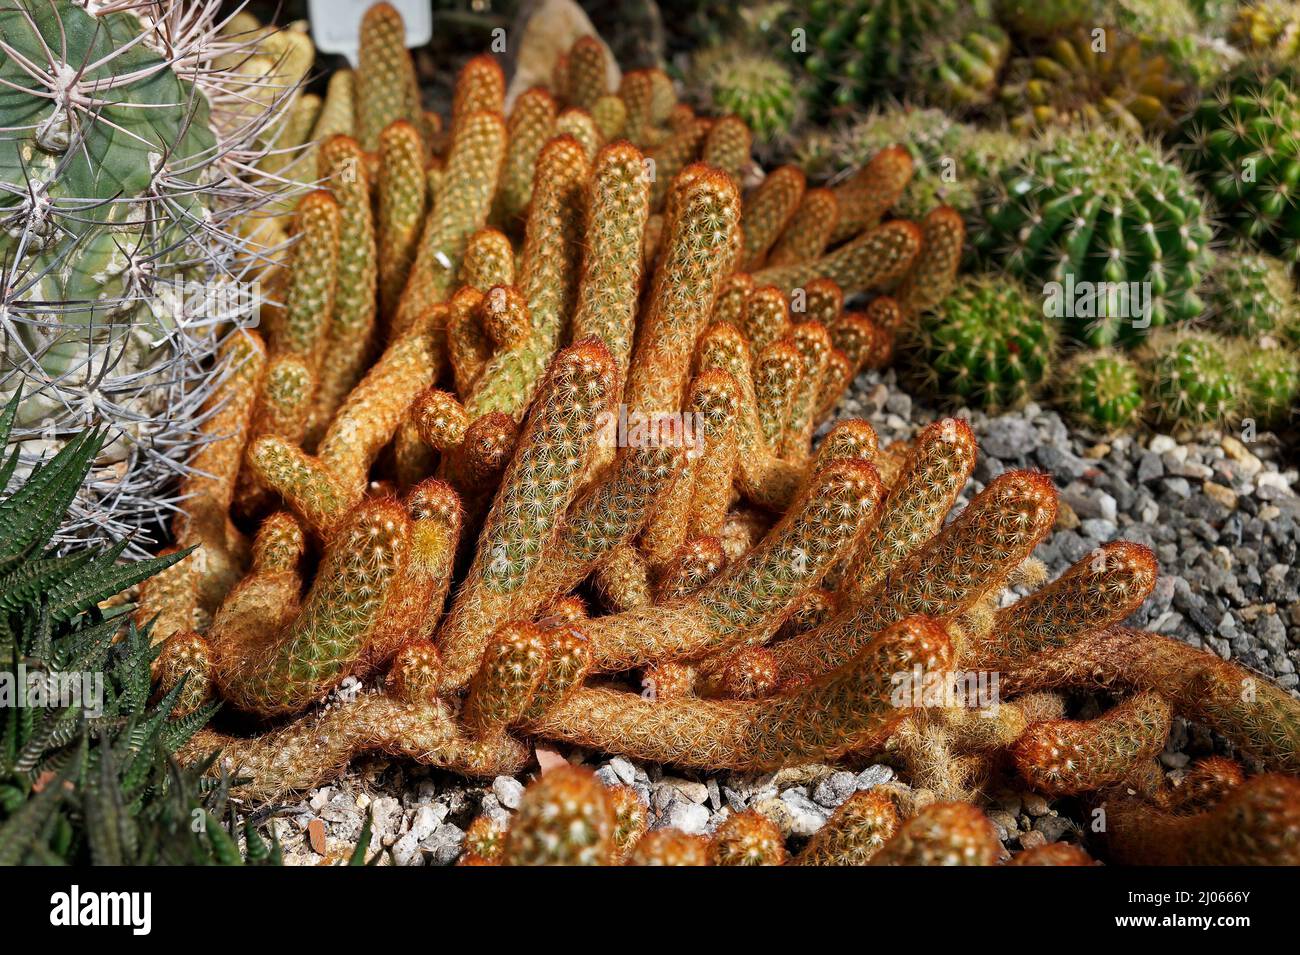 Gold lace cactus or Ladyfinger cactus (Mammillaria elongata) on desert garden, Rio Stock Photo